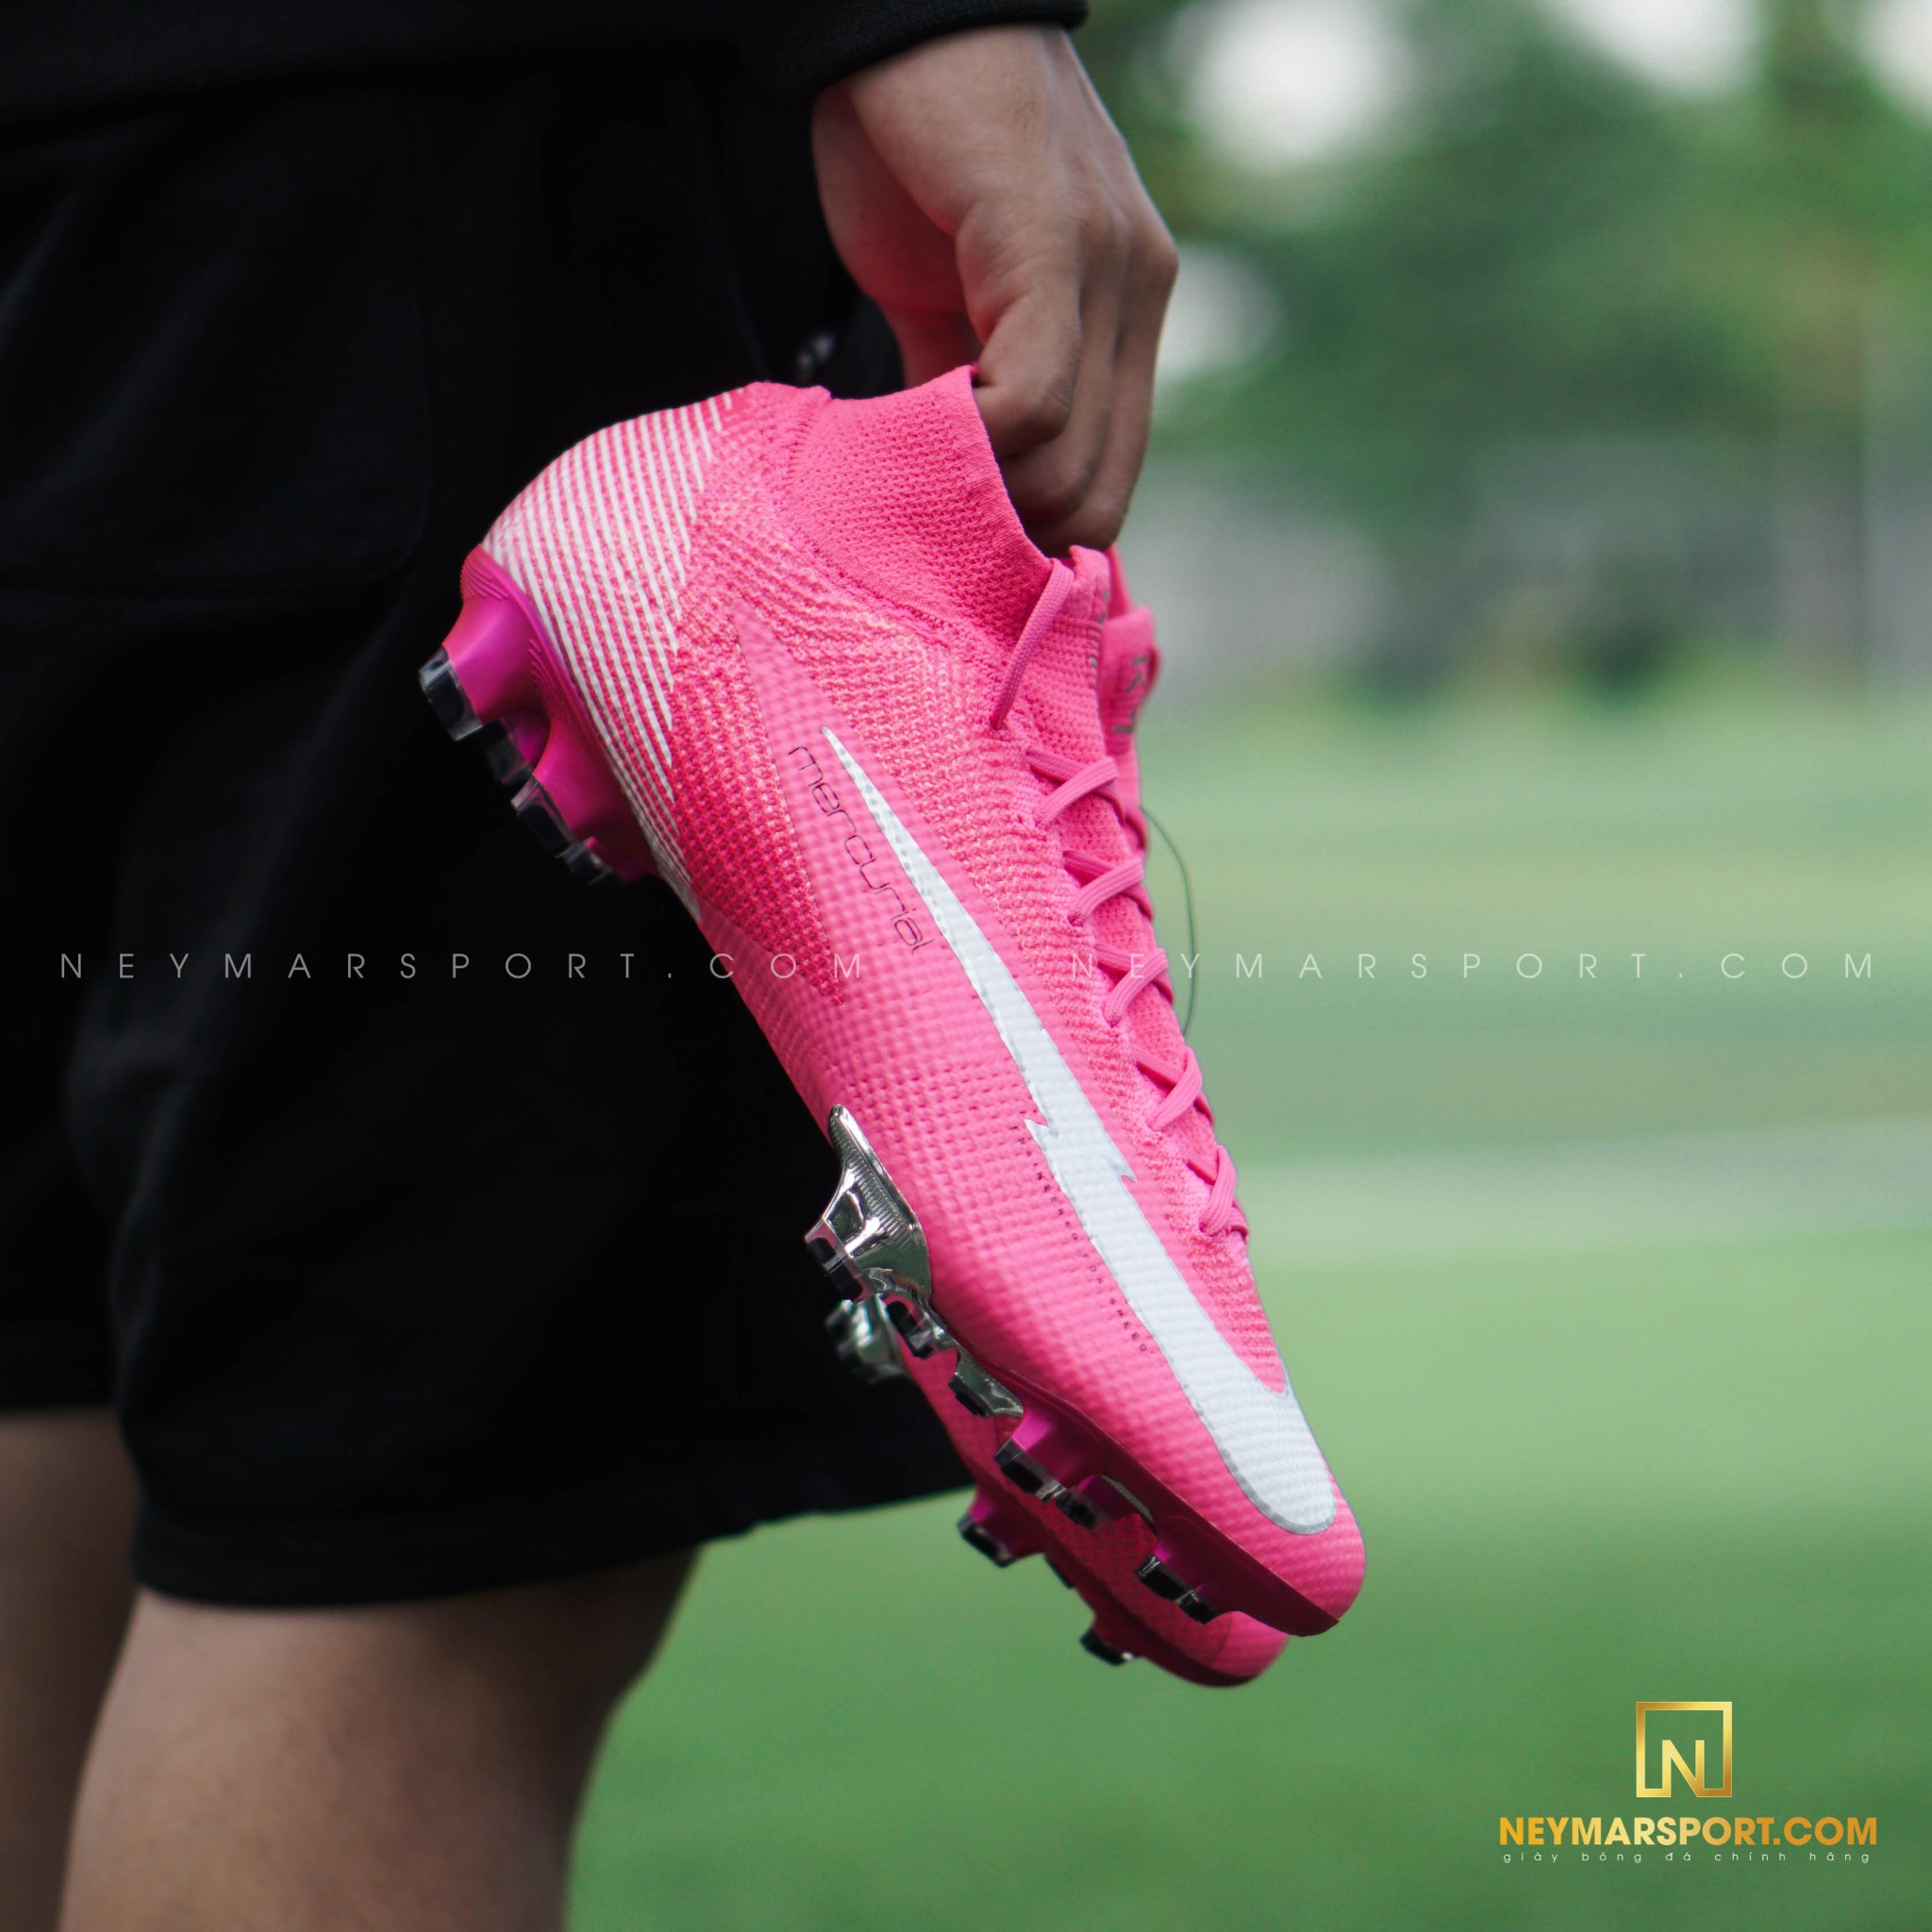 Giày đá bóng Nike Mercurial Mbappé Rosa